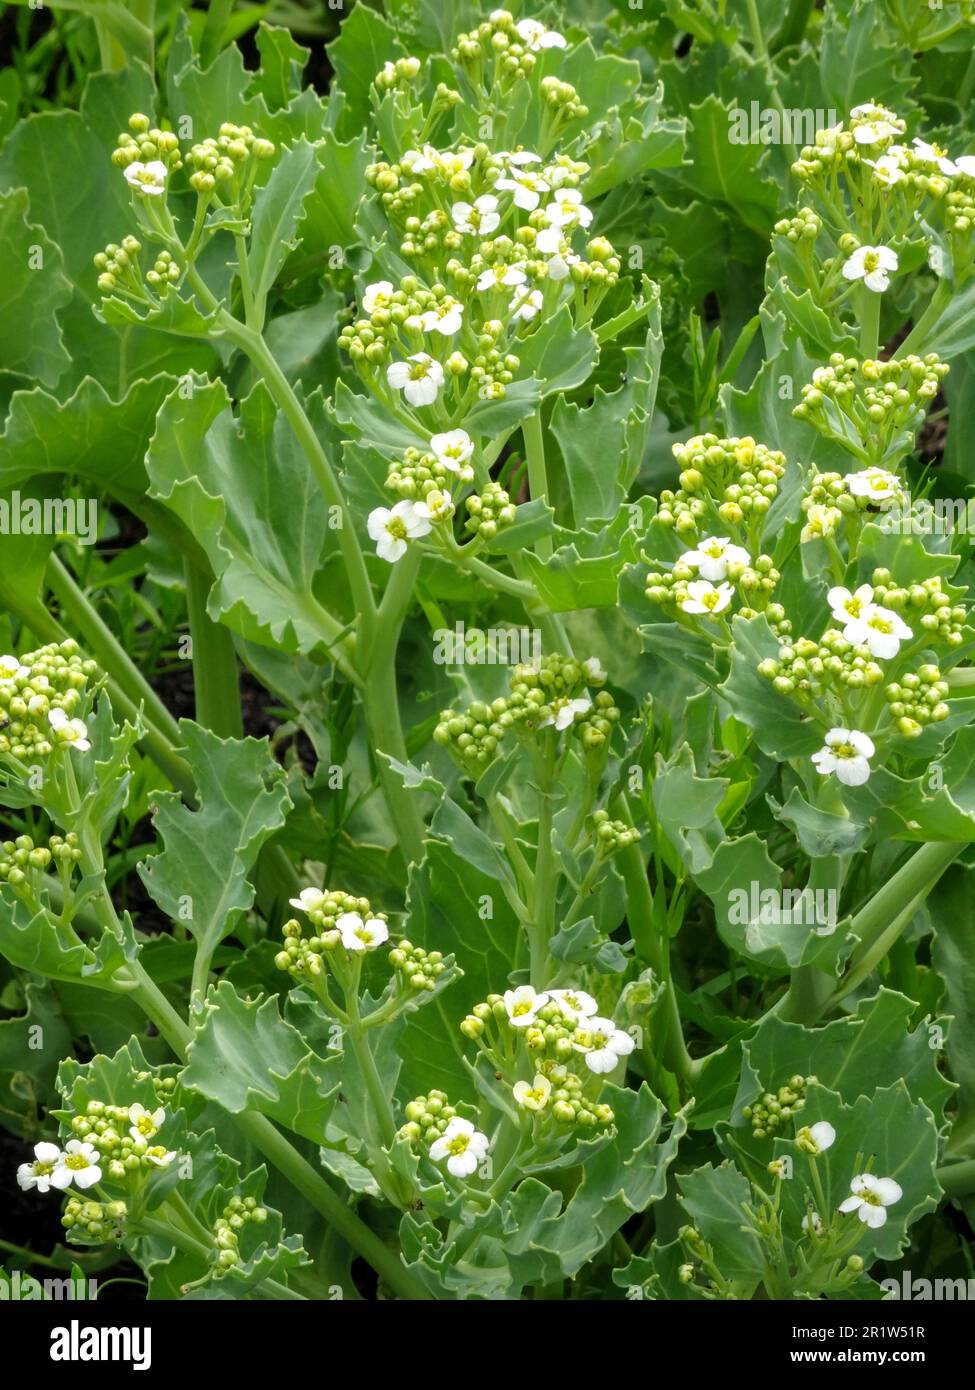 Delicious Seakale Lilywhite - Crambe maritima 'Lily White’. Natural close up vegetable plant portrait Stock Photo